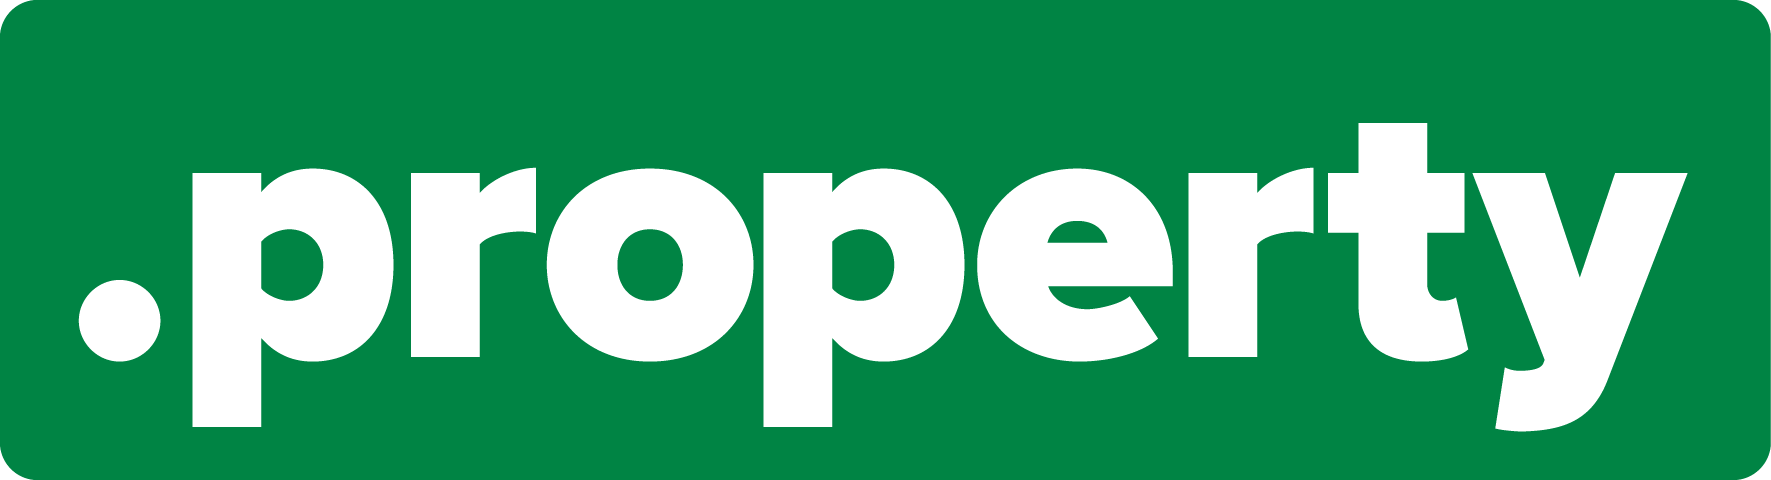 PROPERTY logo